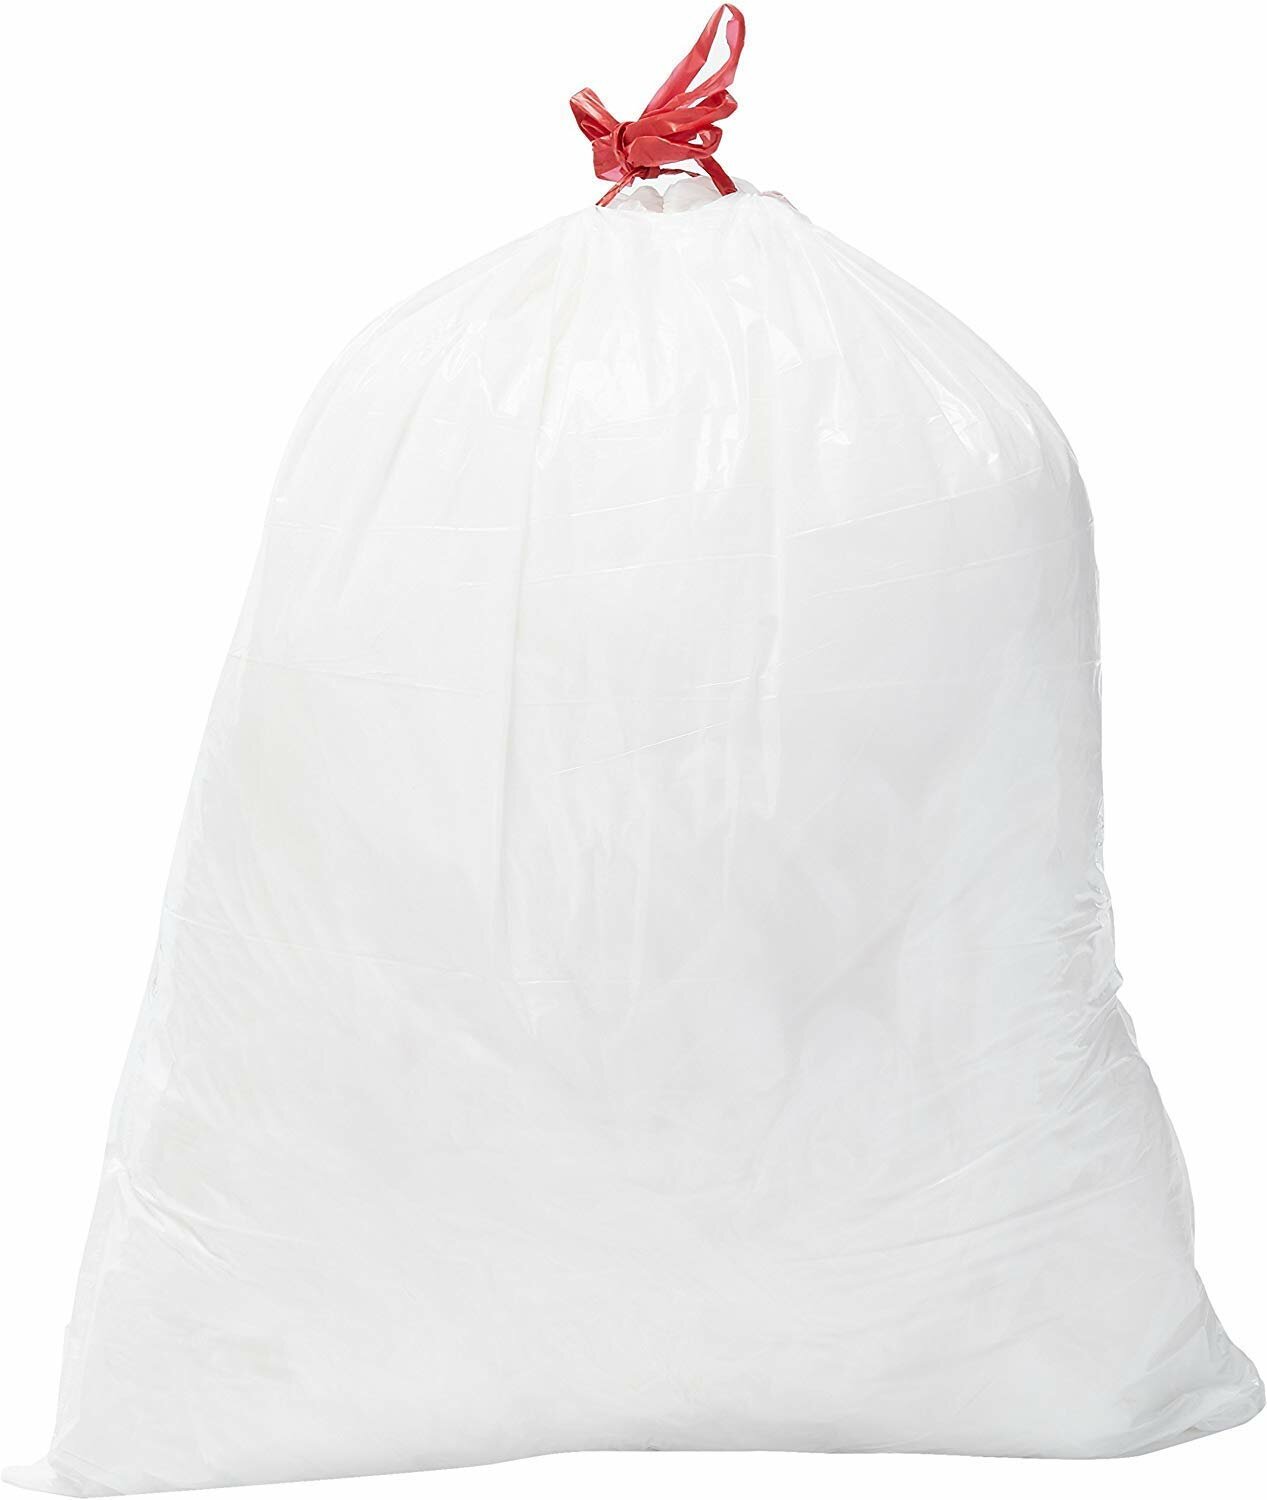 Toughbag Trash Bags for 55 Gallon 50 Count